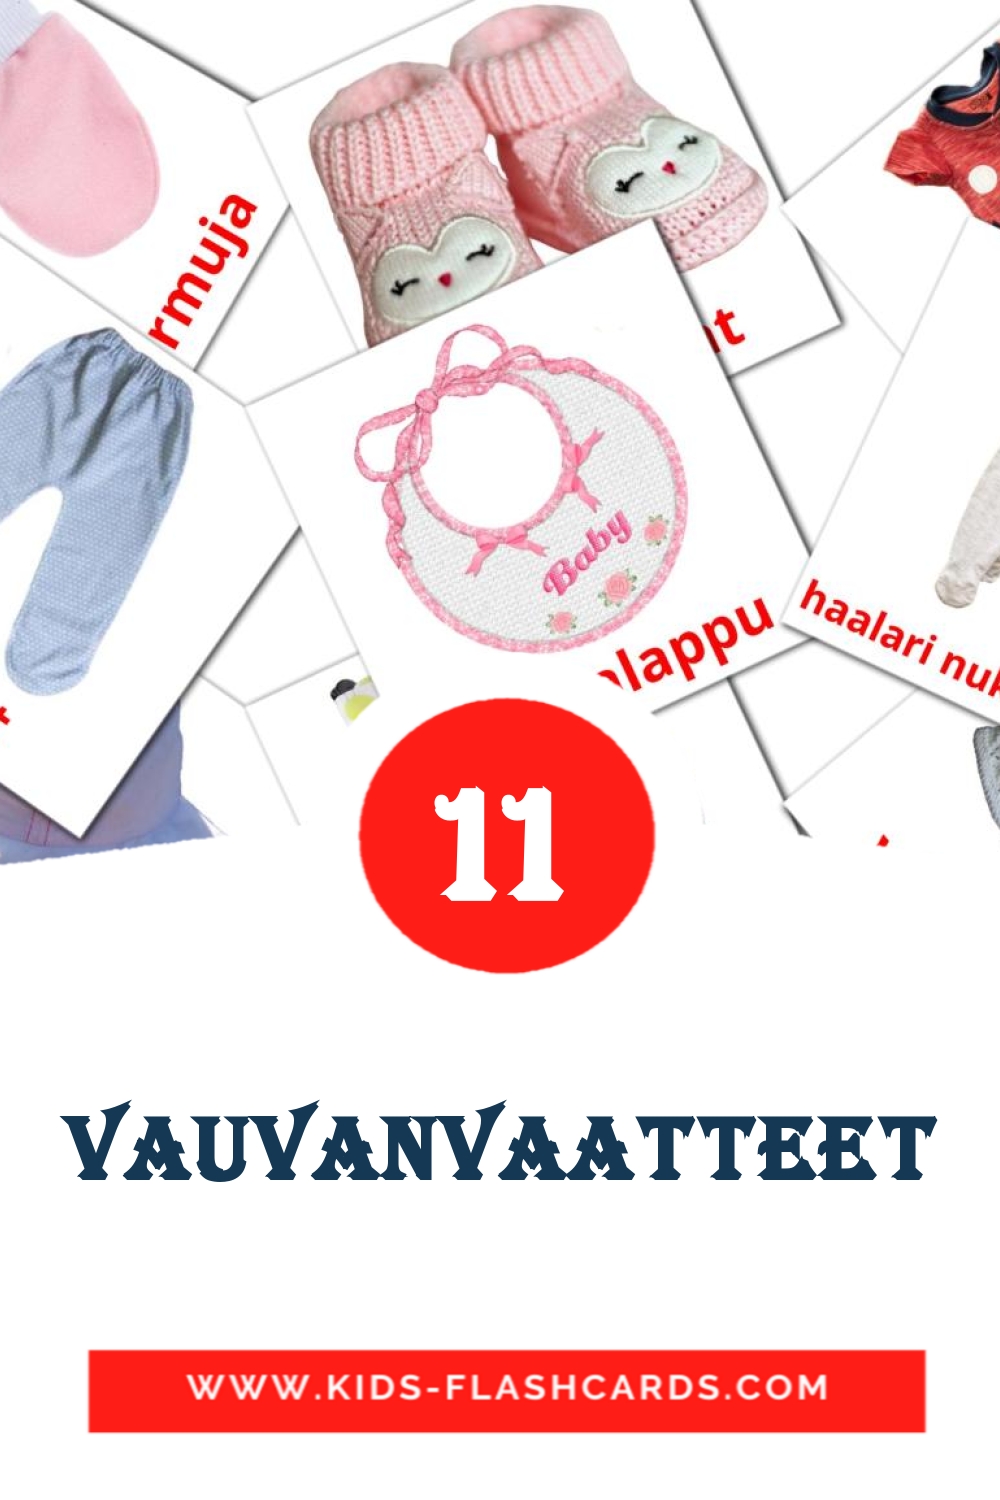 11 Cartões com Imagens de vauvanvaatteet para Jardim de Infância em finlandês